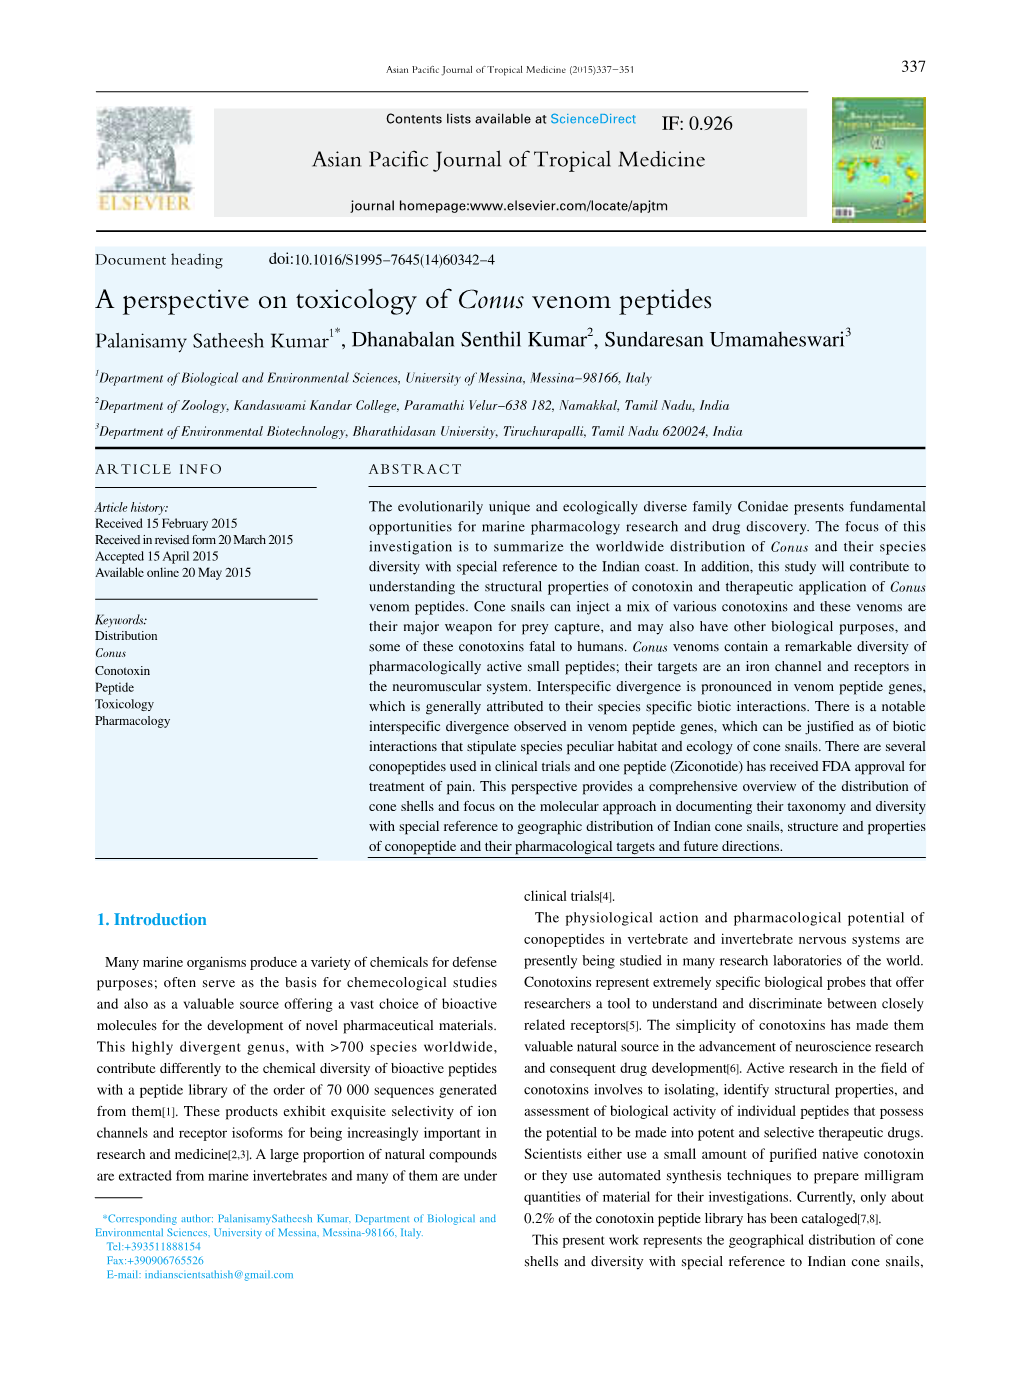 A Perspective on Toxicology of Conus Venom Peptides Palanisamy Satheesh Kumar1*, Dhanabalan Senthil Kumar2, Sundaresan Umamaheswari3